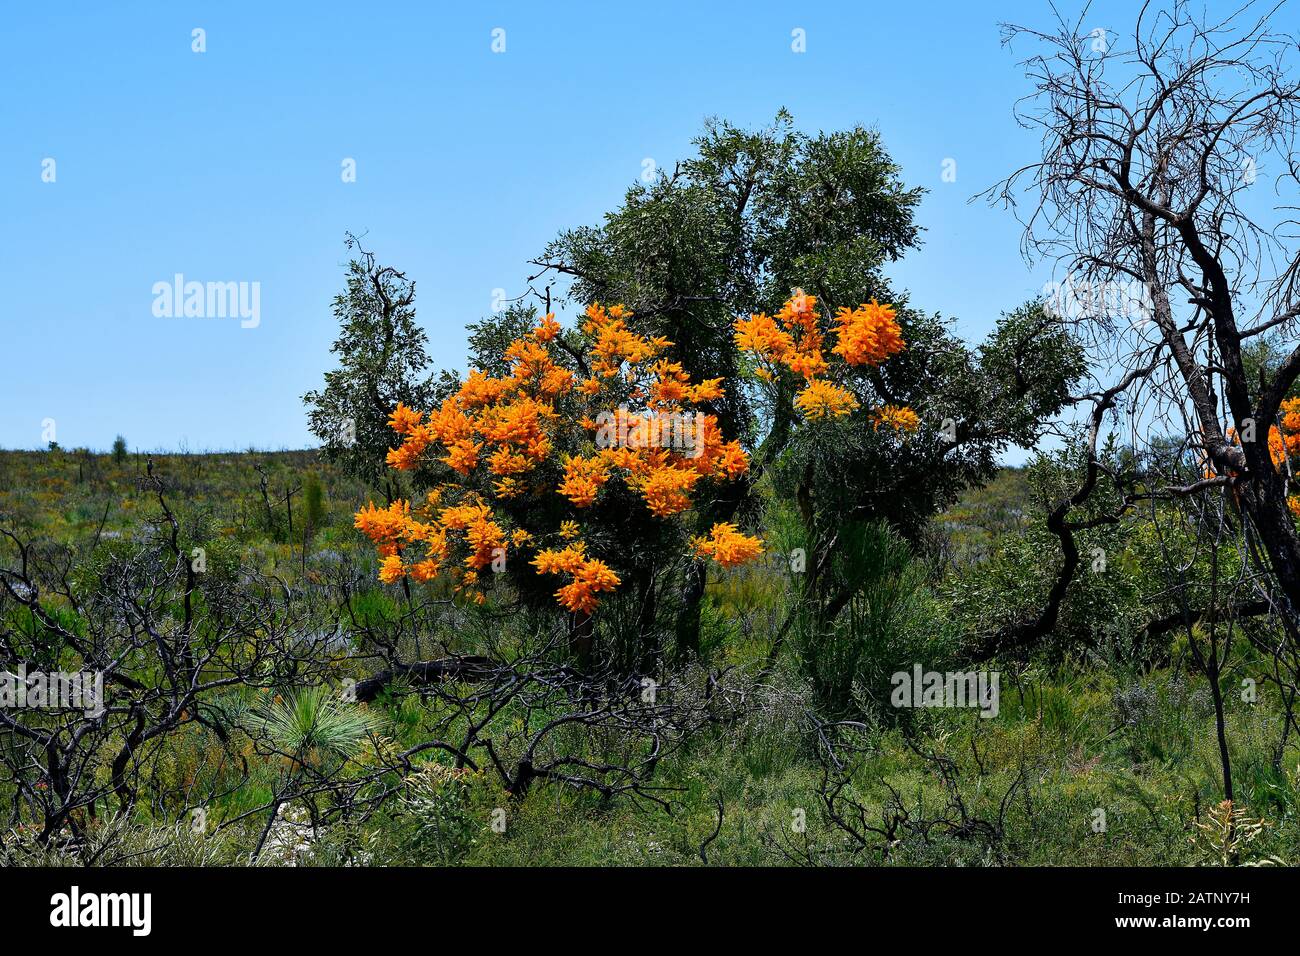 Australia, landscape with flowering Western Australian Christmas tree Stock Photo